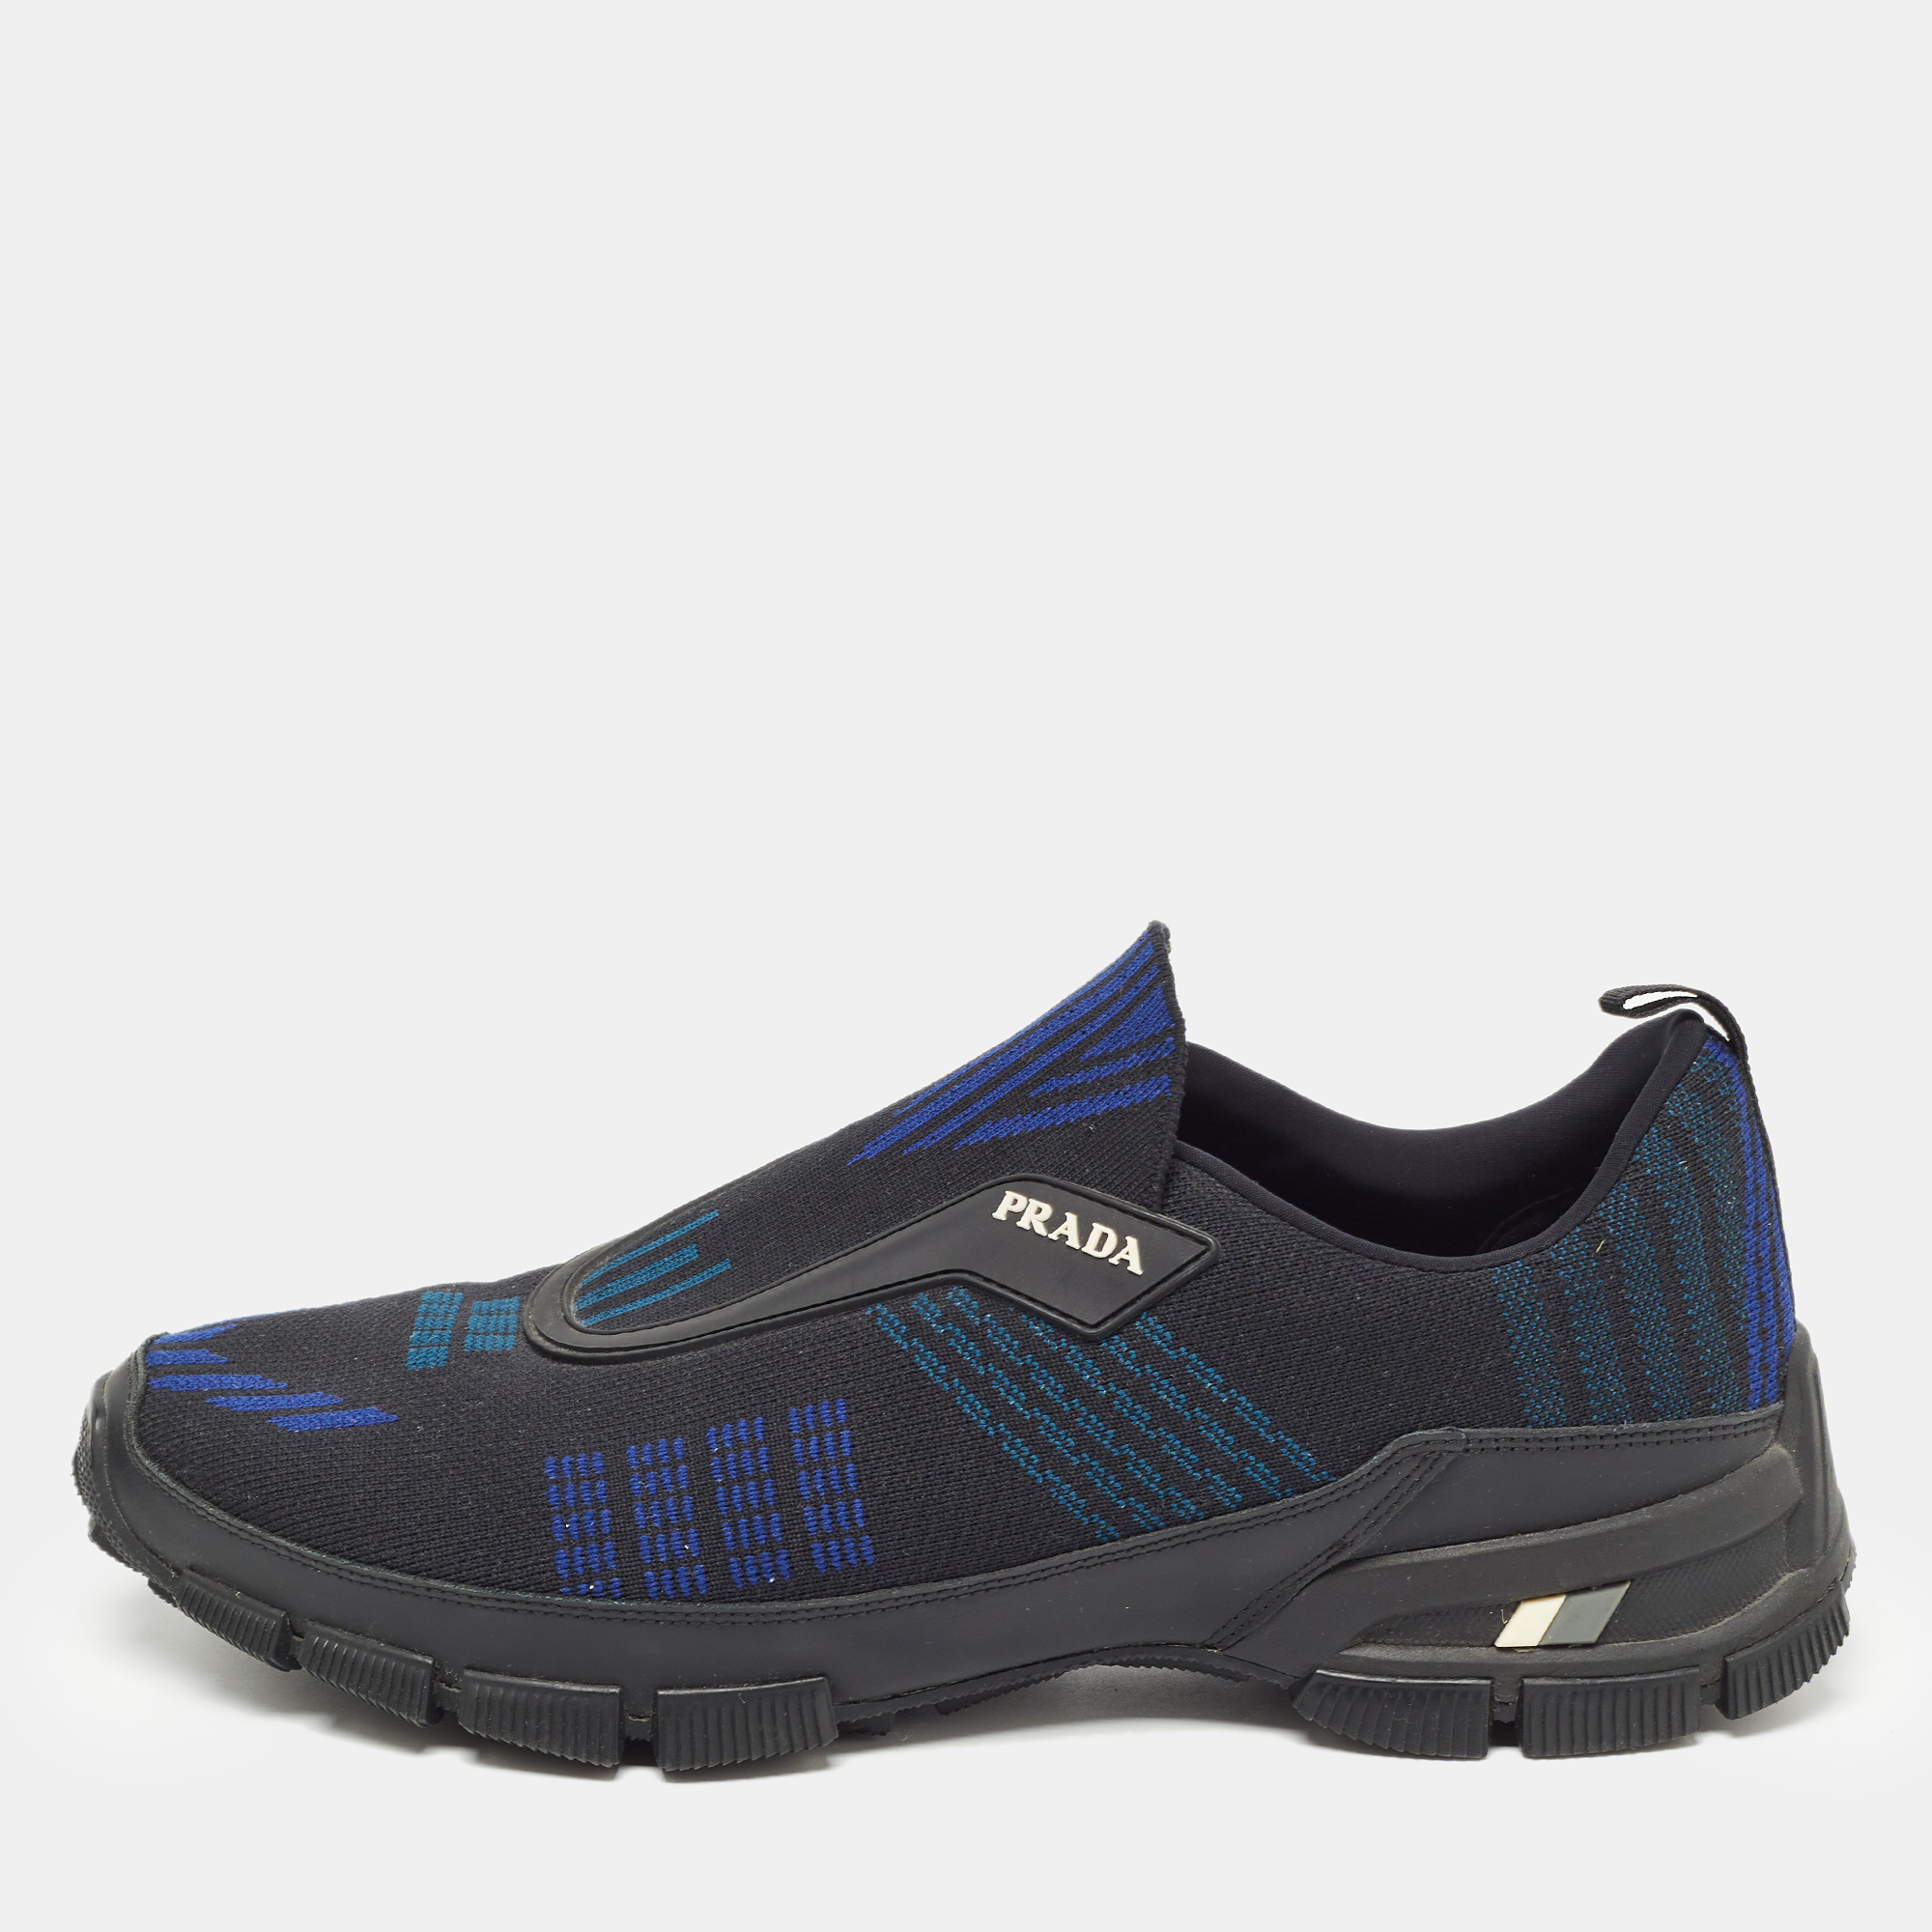 Prada sport prada black/blue knit fabric low top sneakers size 42.5